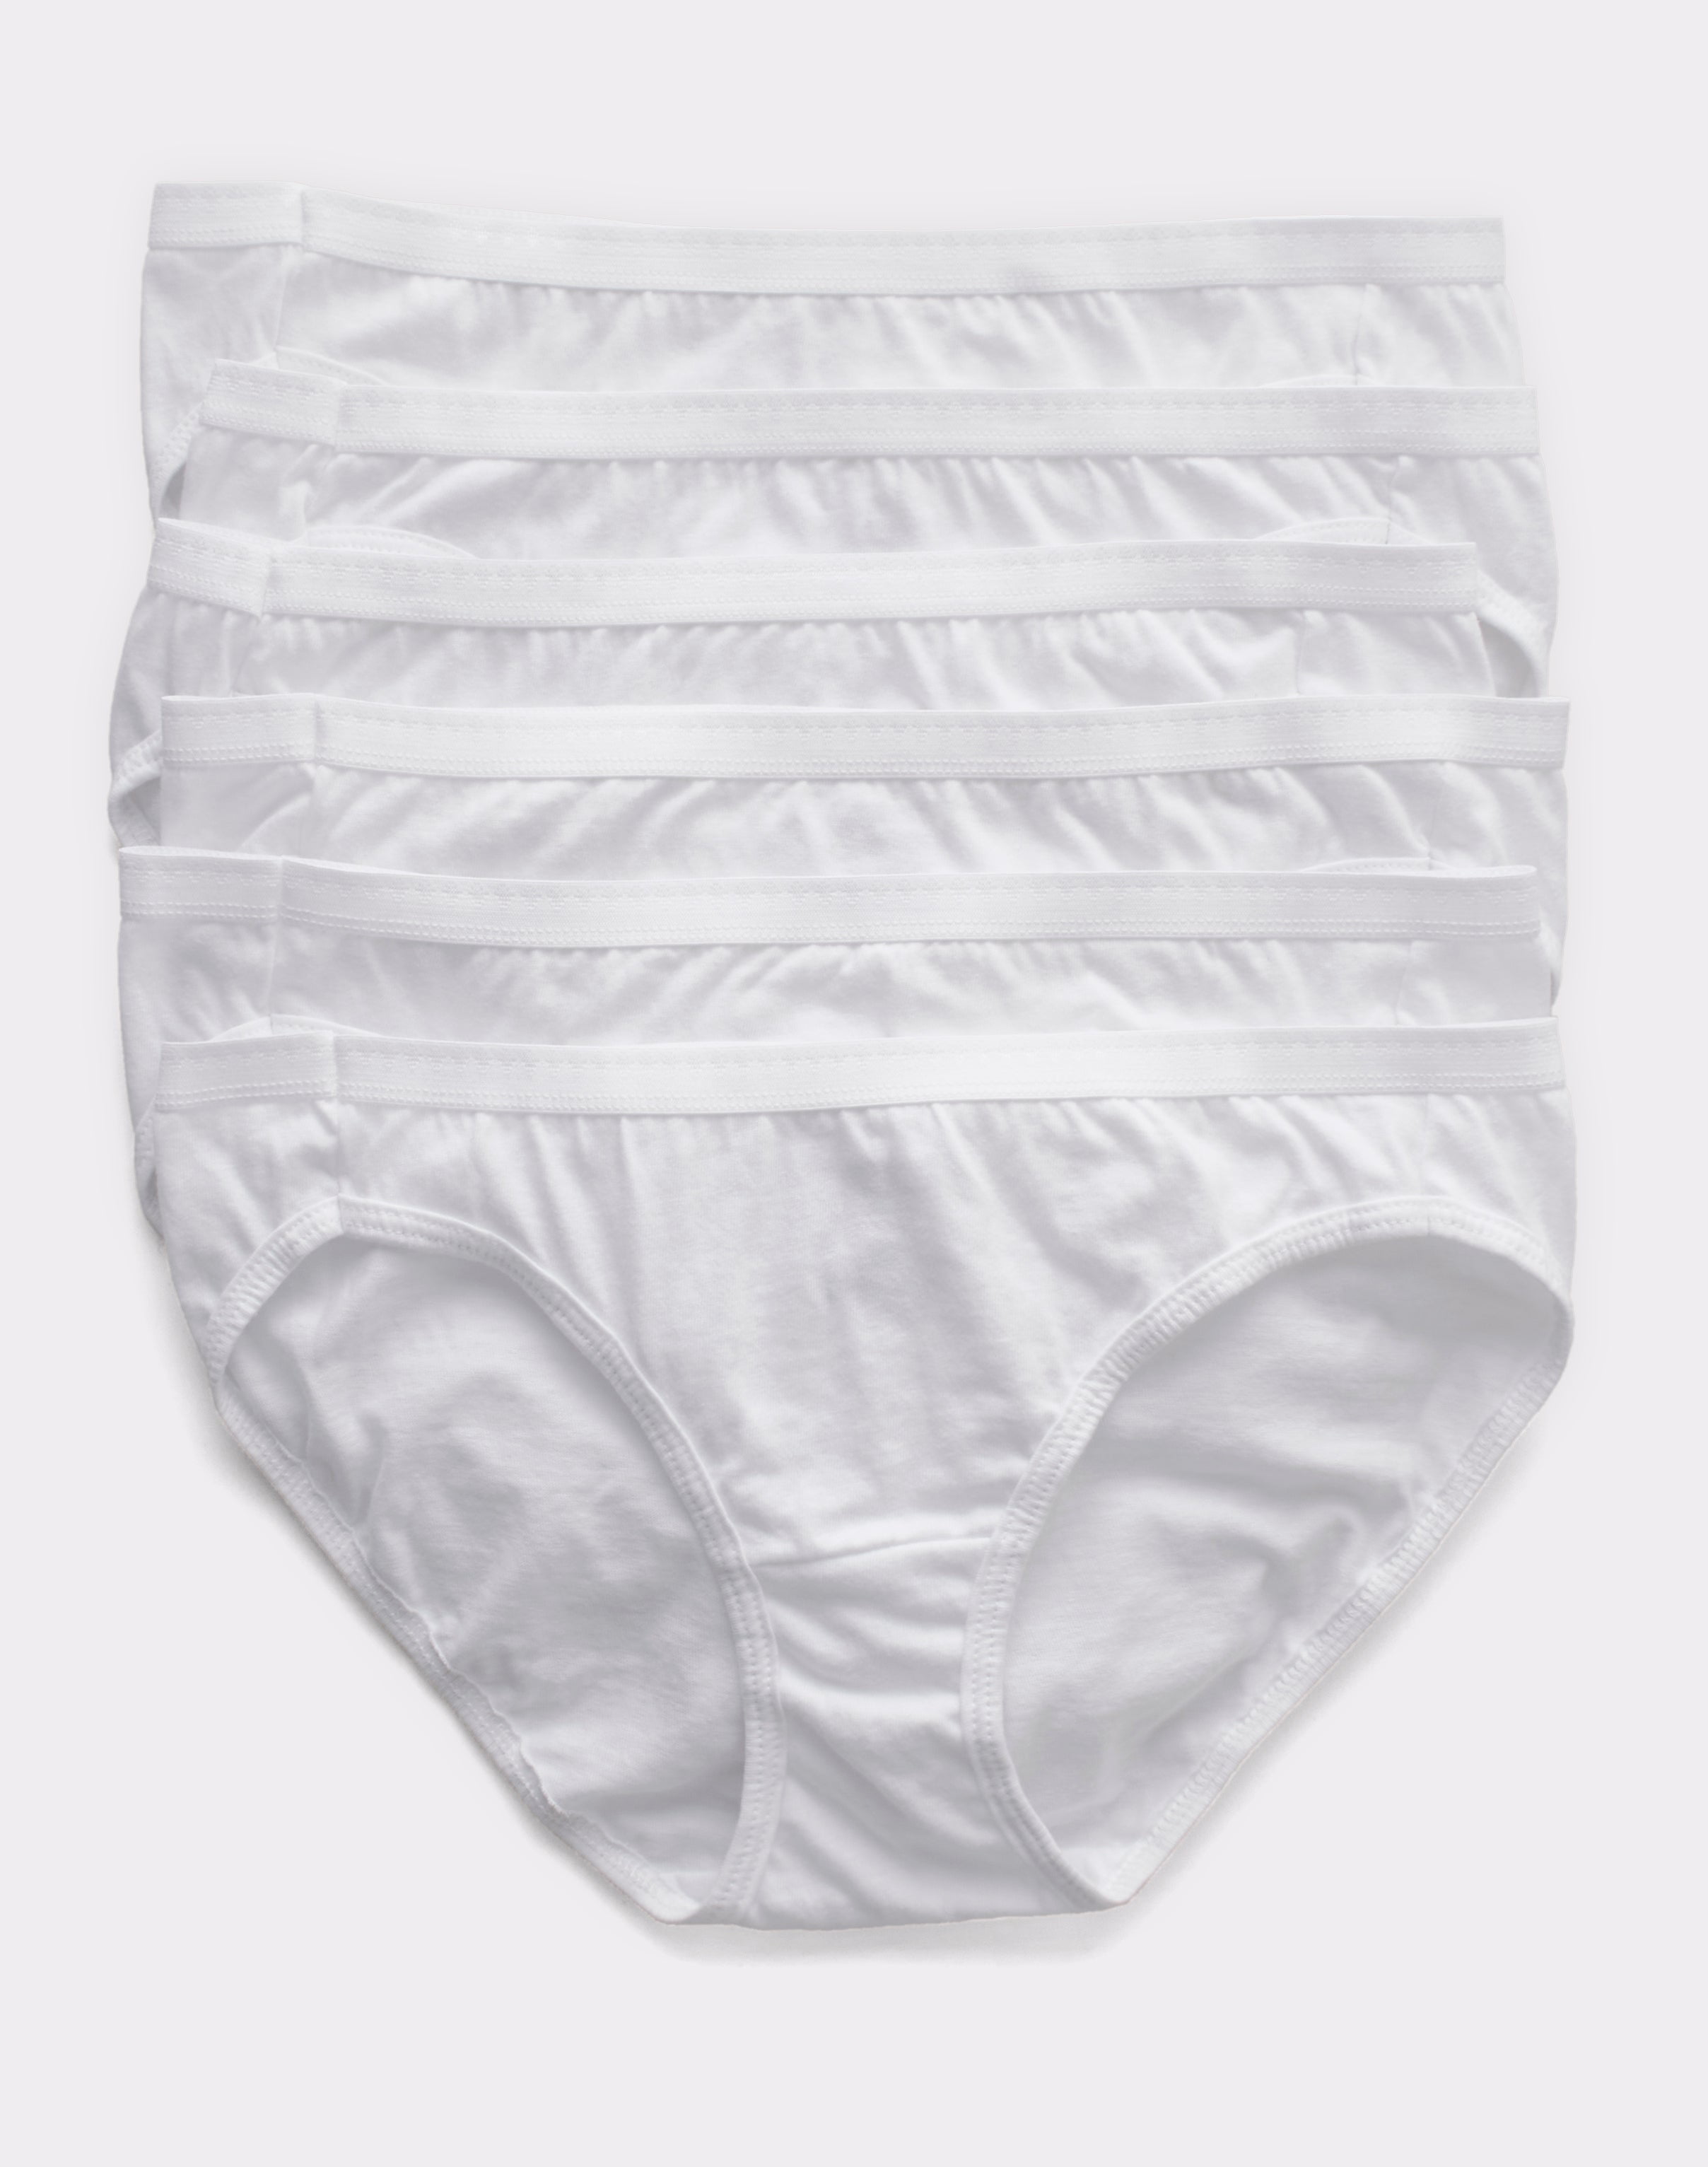 Hanes Ultimate Women's Breathable Cotton Bikini Underwear, 6-Pack White/ White/White/White/White/White 6 